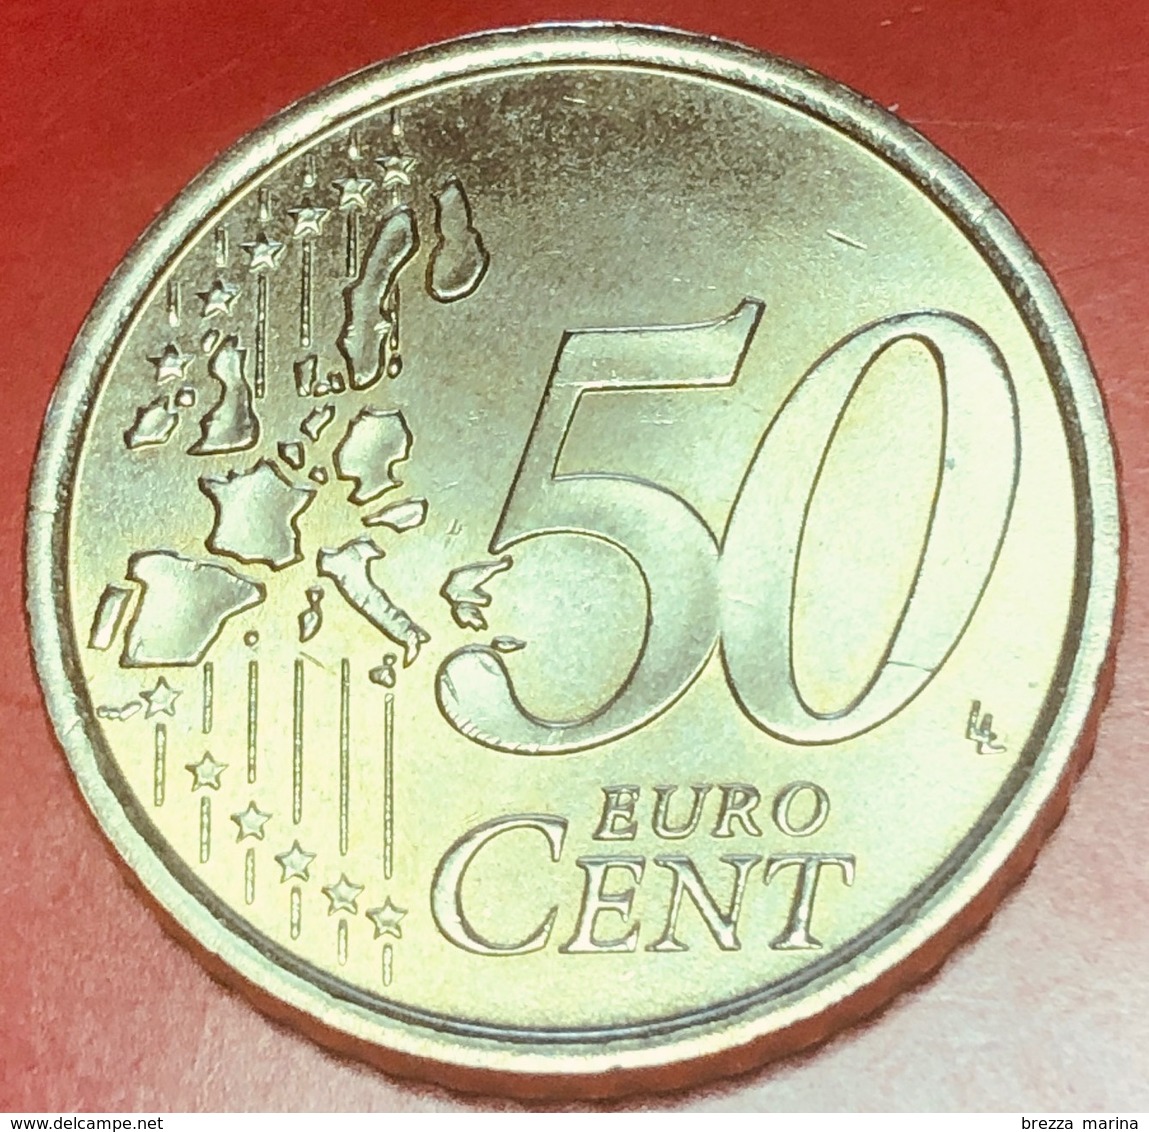 FINLANDIA - 2000 - Moneta - Leone Araldico - Euro - 0.50 - Finlandia